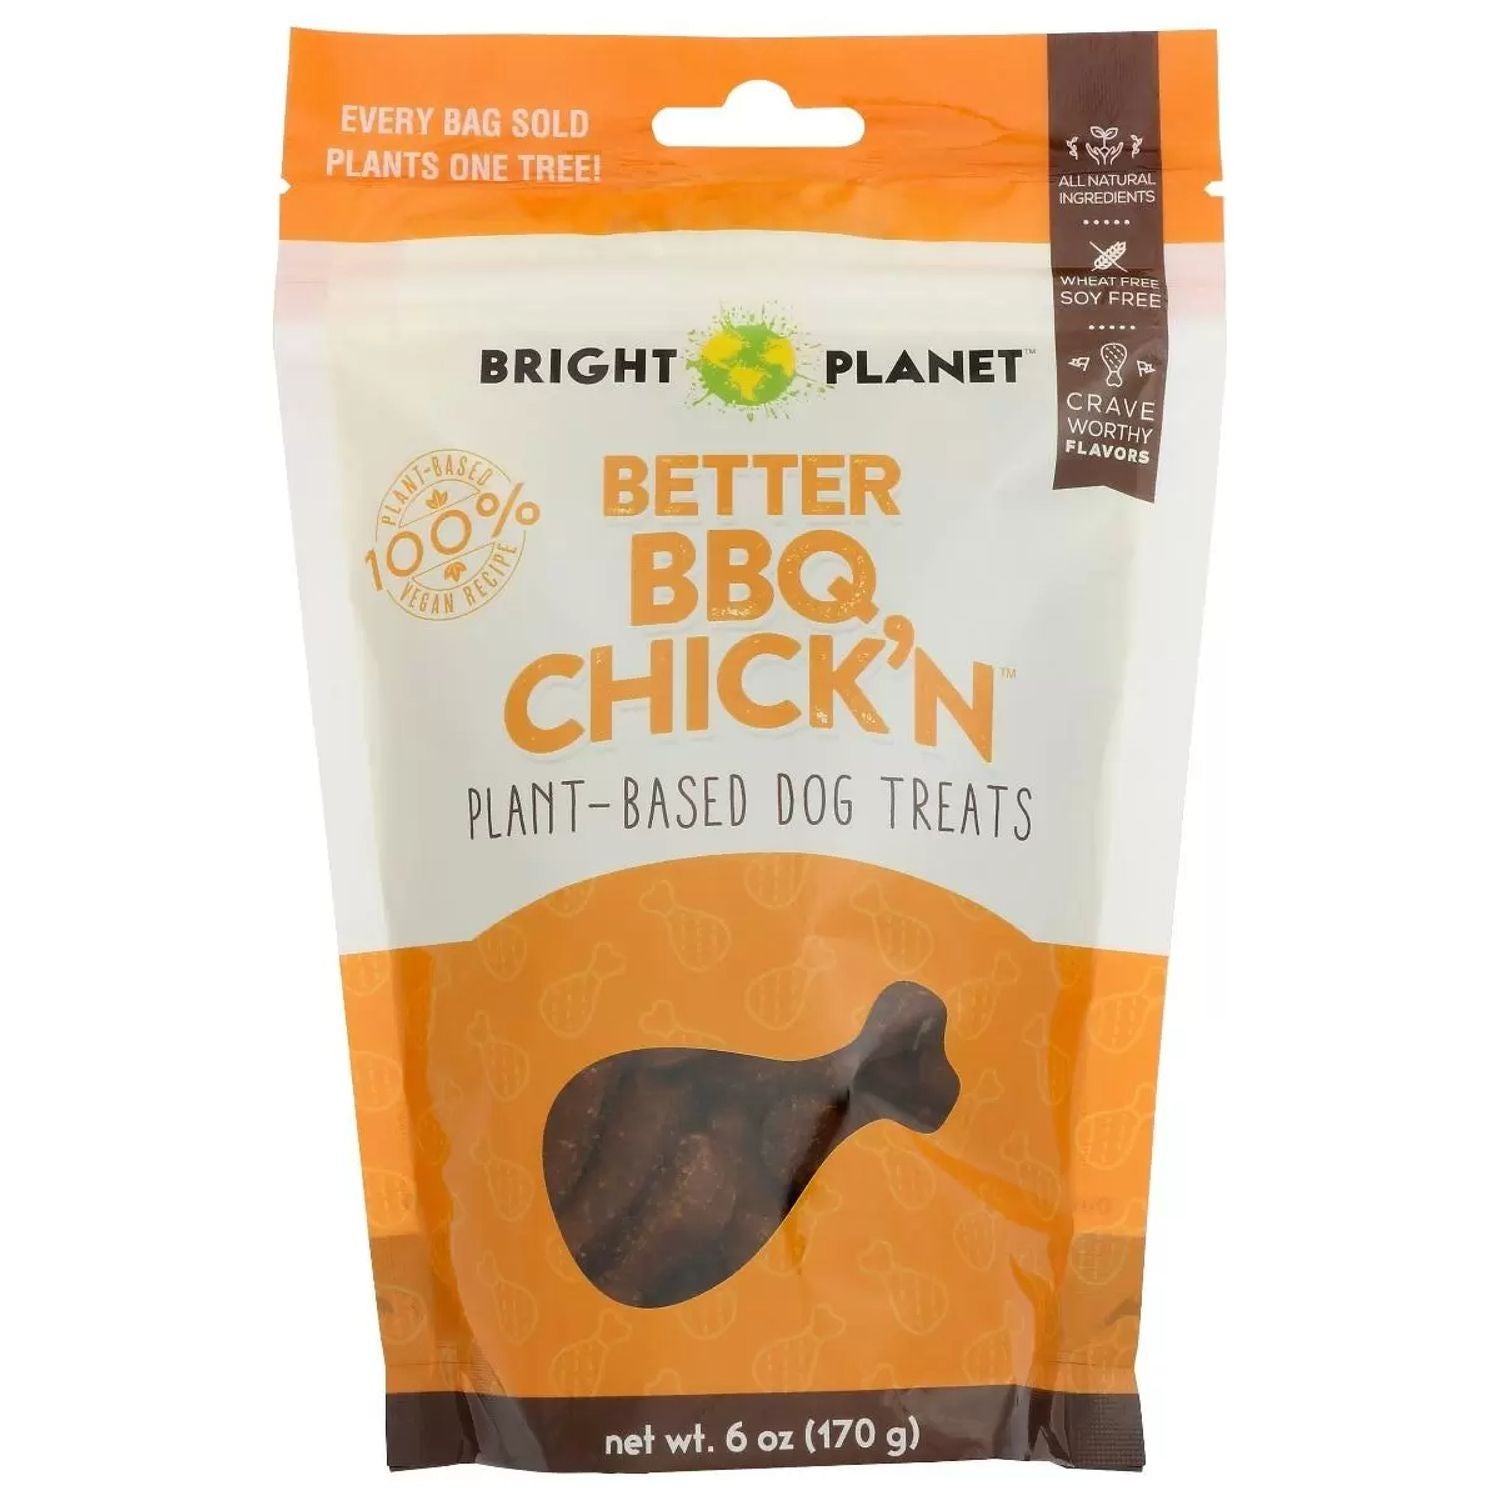 Bright Planet Better Bbq Chick'n Plant Based Dog Treat 6 oz.